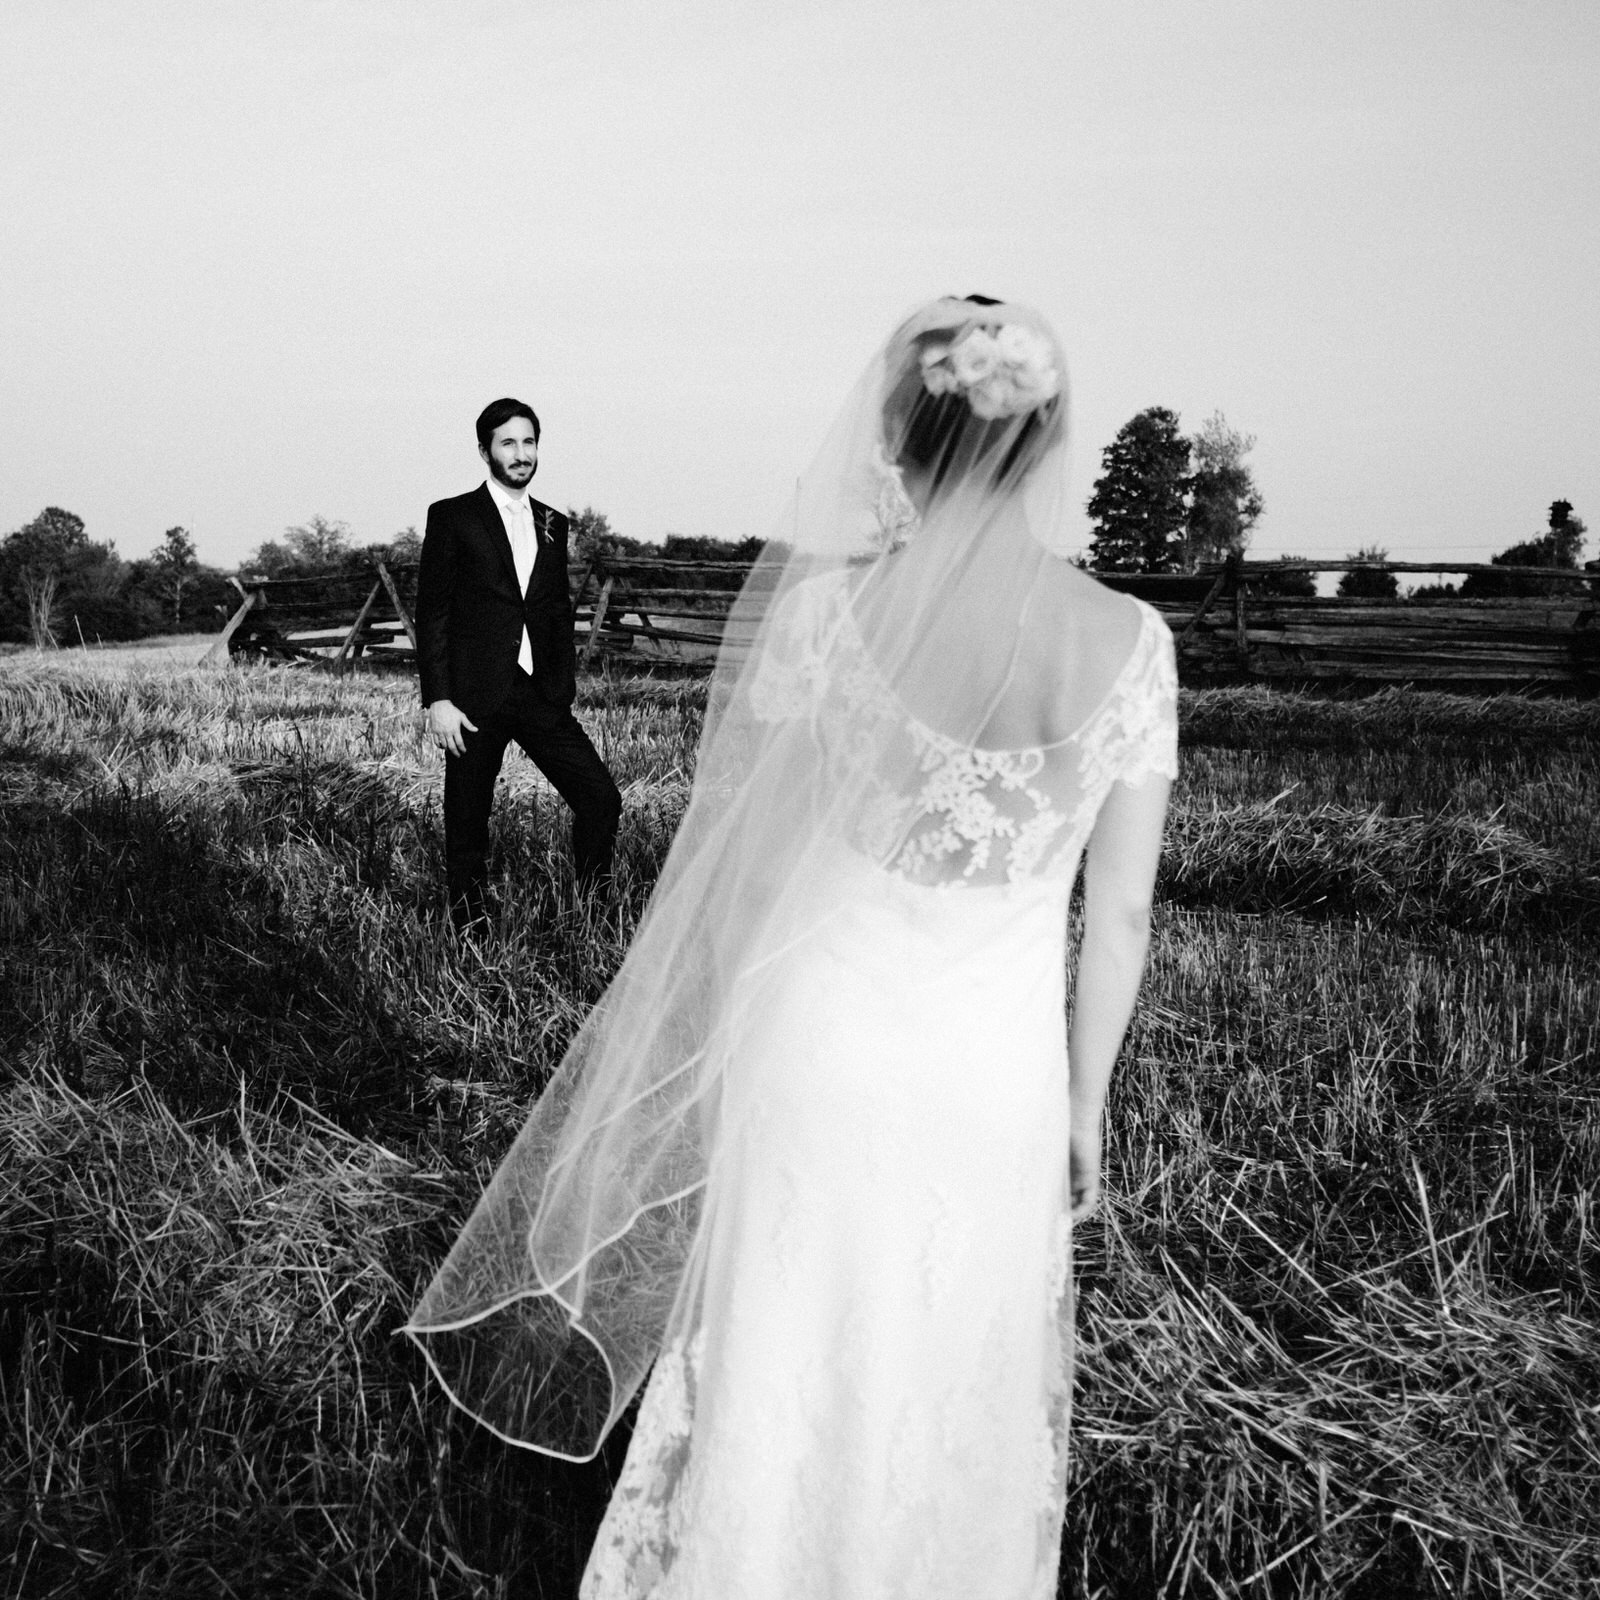 Ontario Farmland bride and groom wedding portraits.jpg